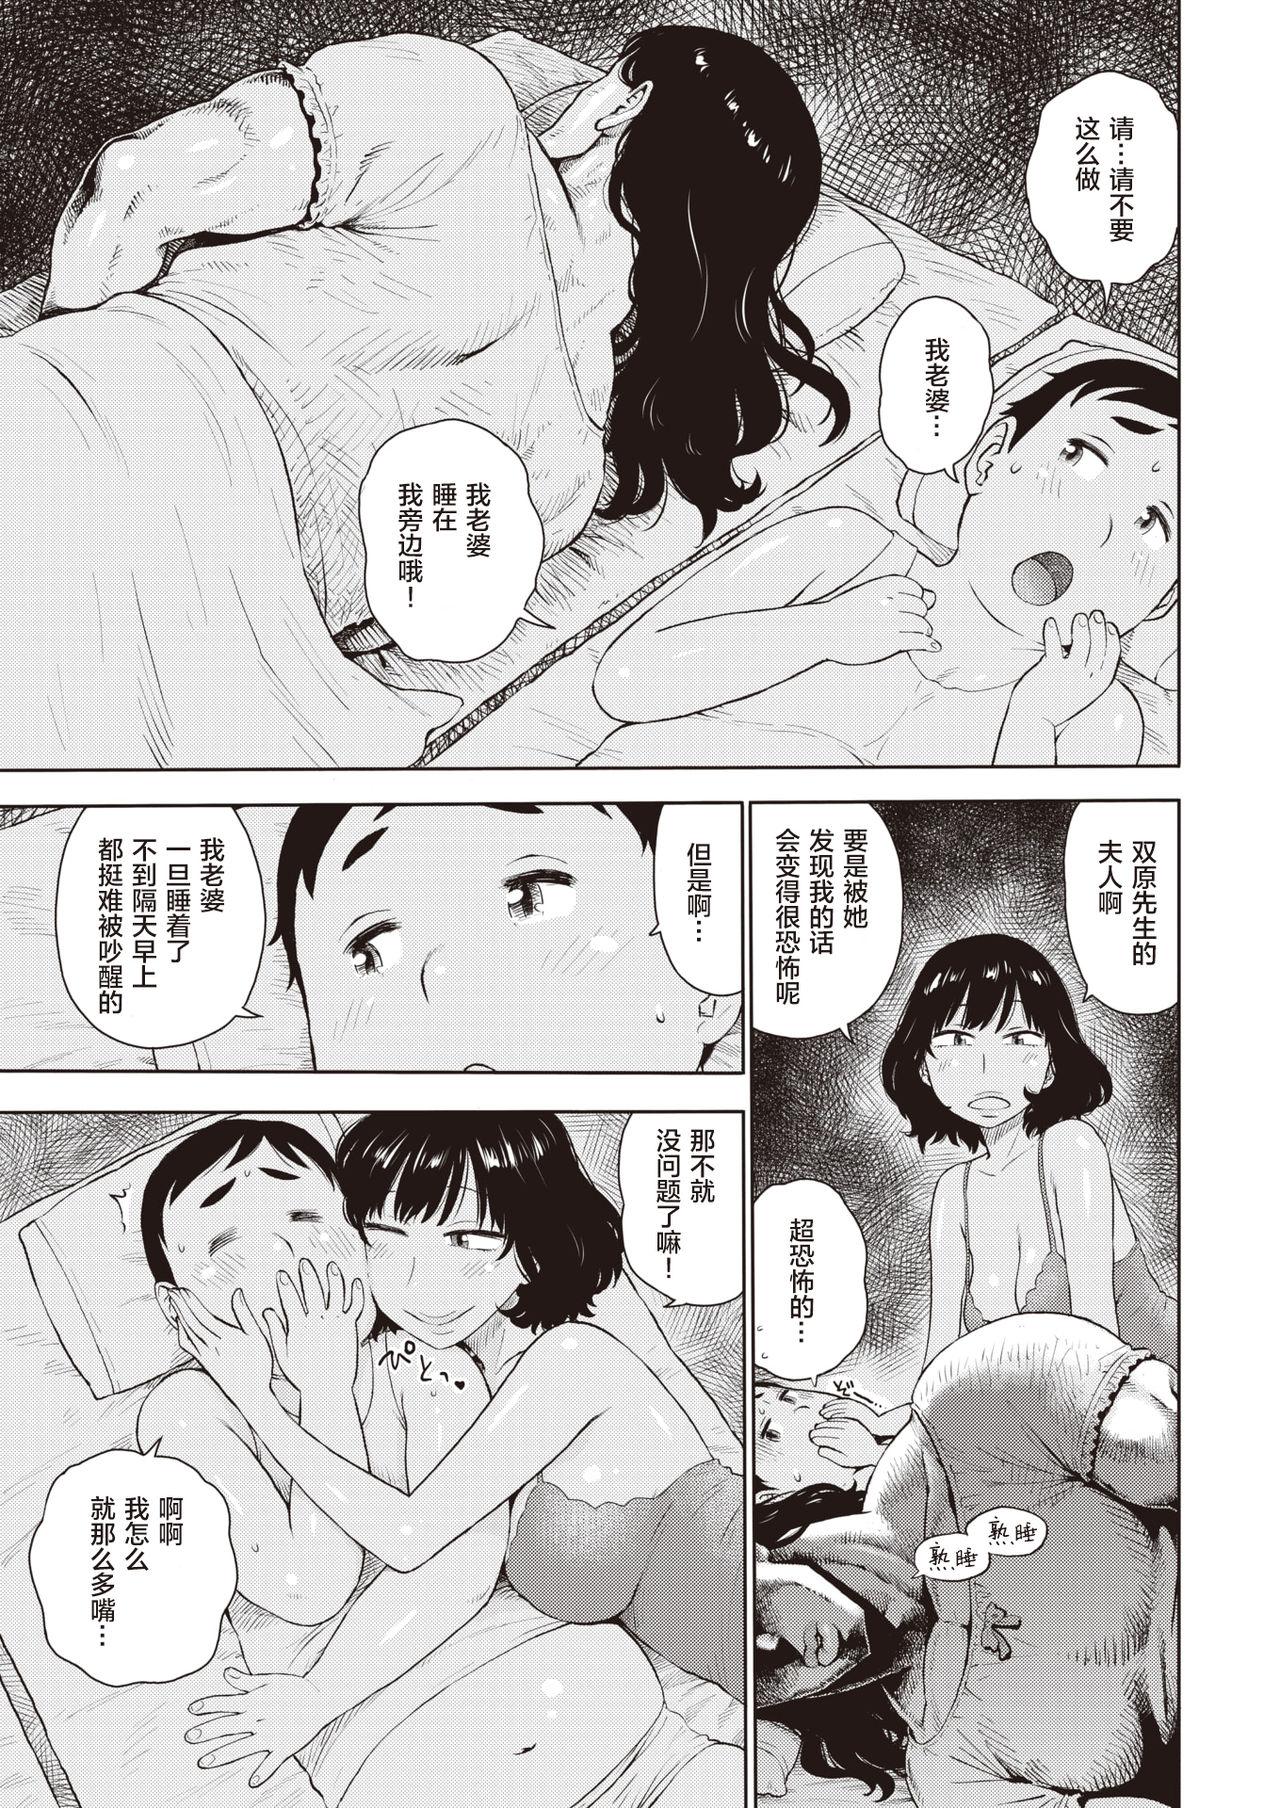 Pissing Gyaku Yobai Solo Female - Page 4